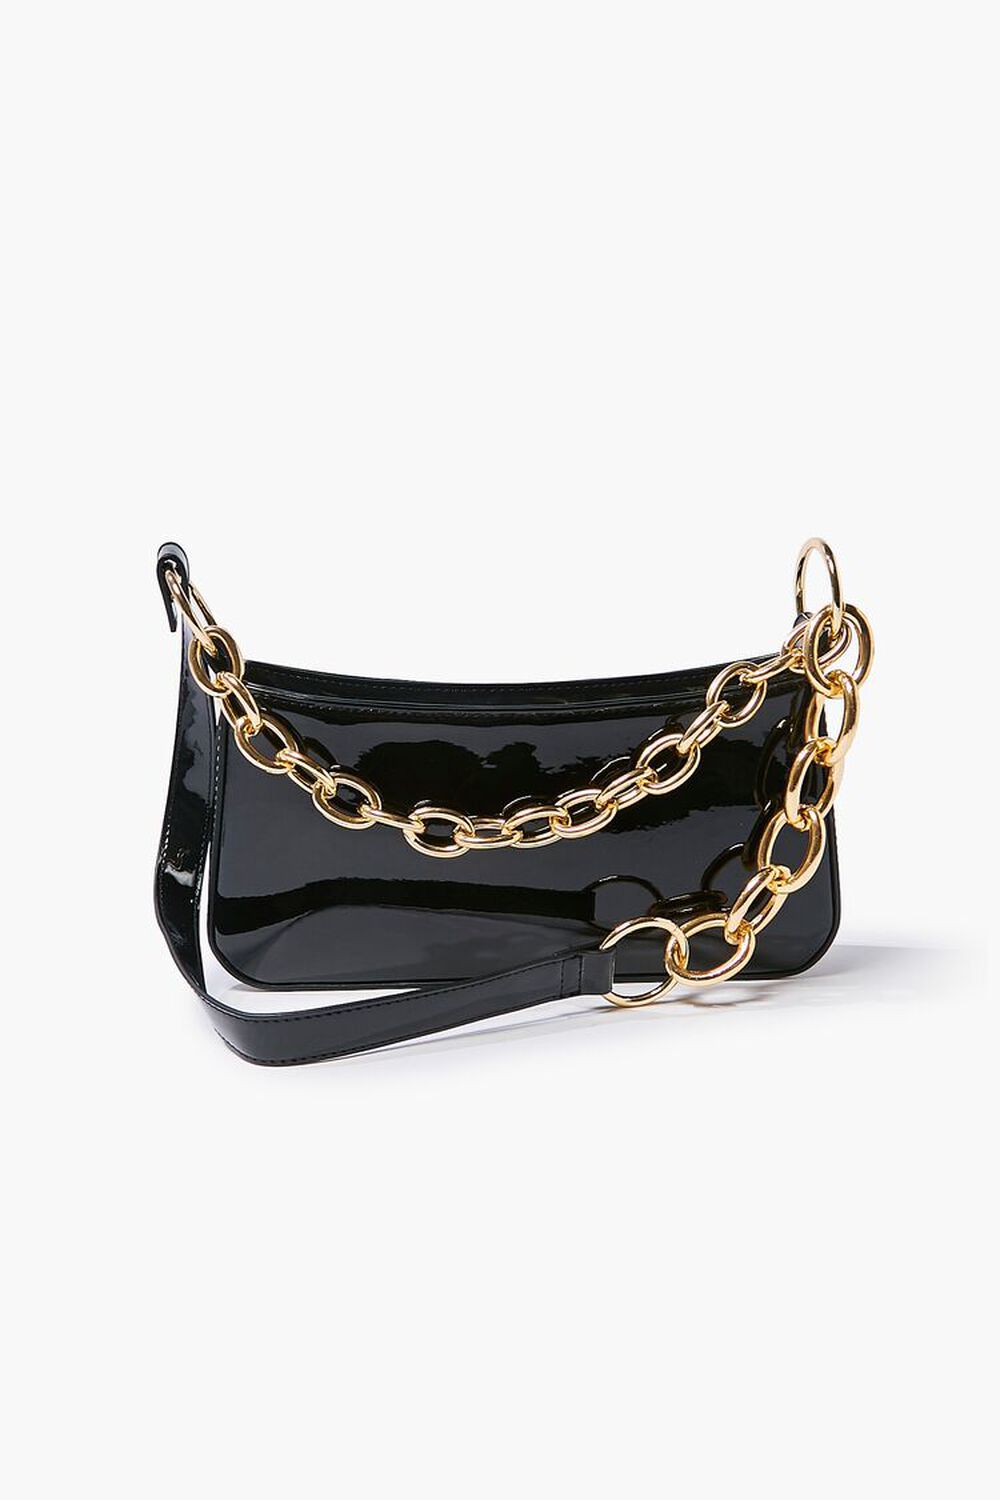 BLACK Faux Leather Chain Shoulder Bag, image 1